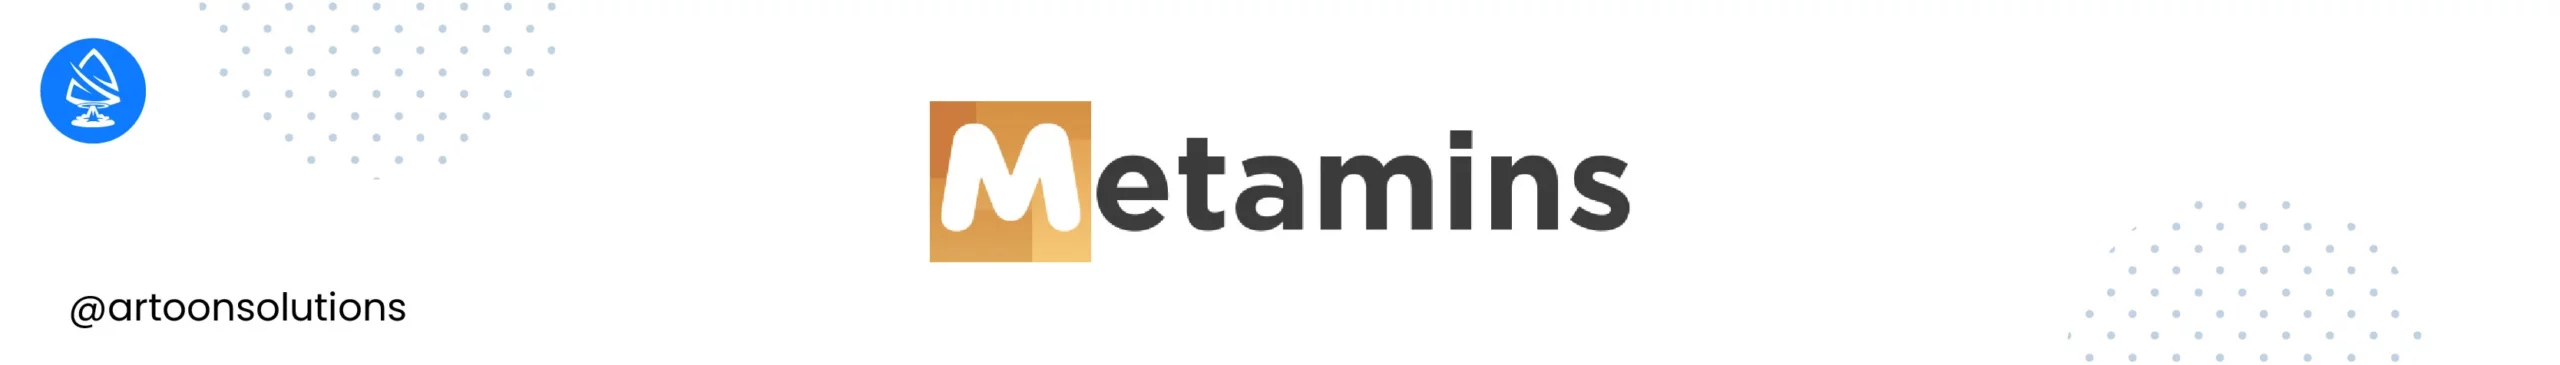 Metamins - One of Mobile App Development Company